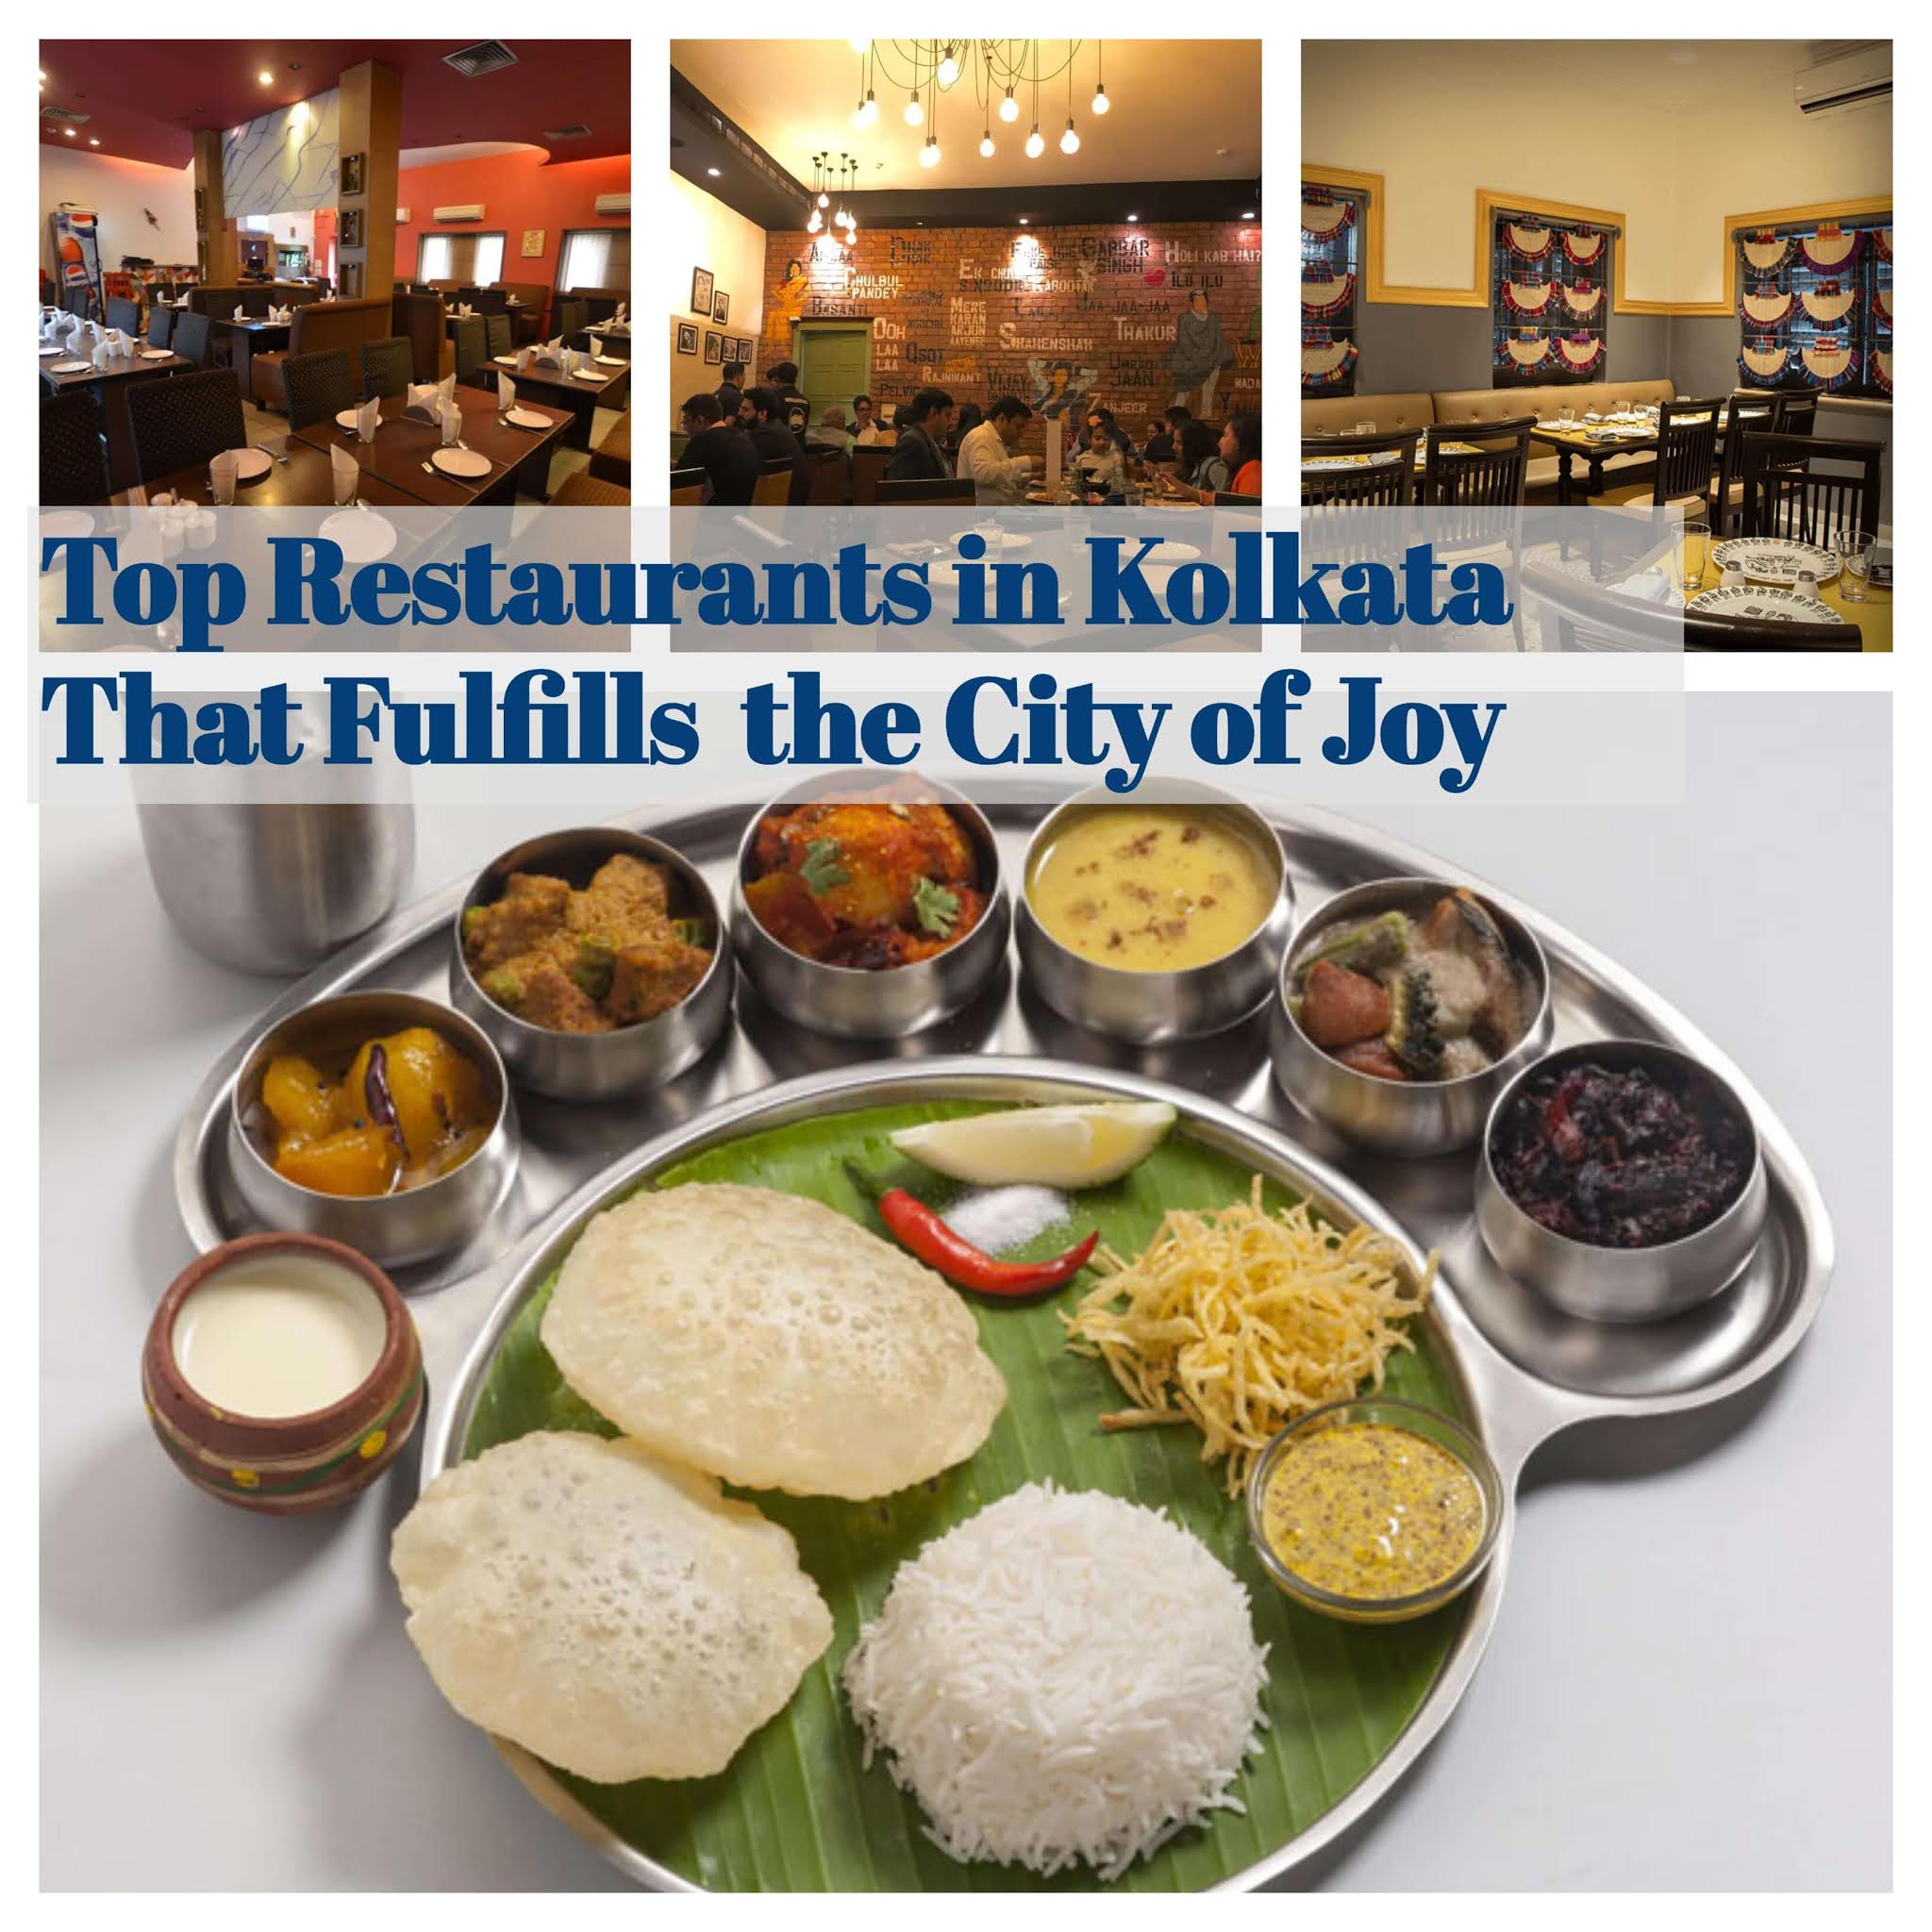 Top Rekaurmiils in Kolkata
That Fulfills the City of Joy